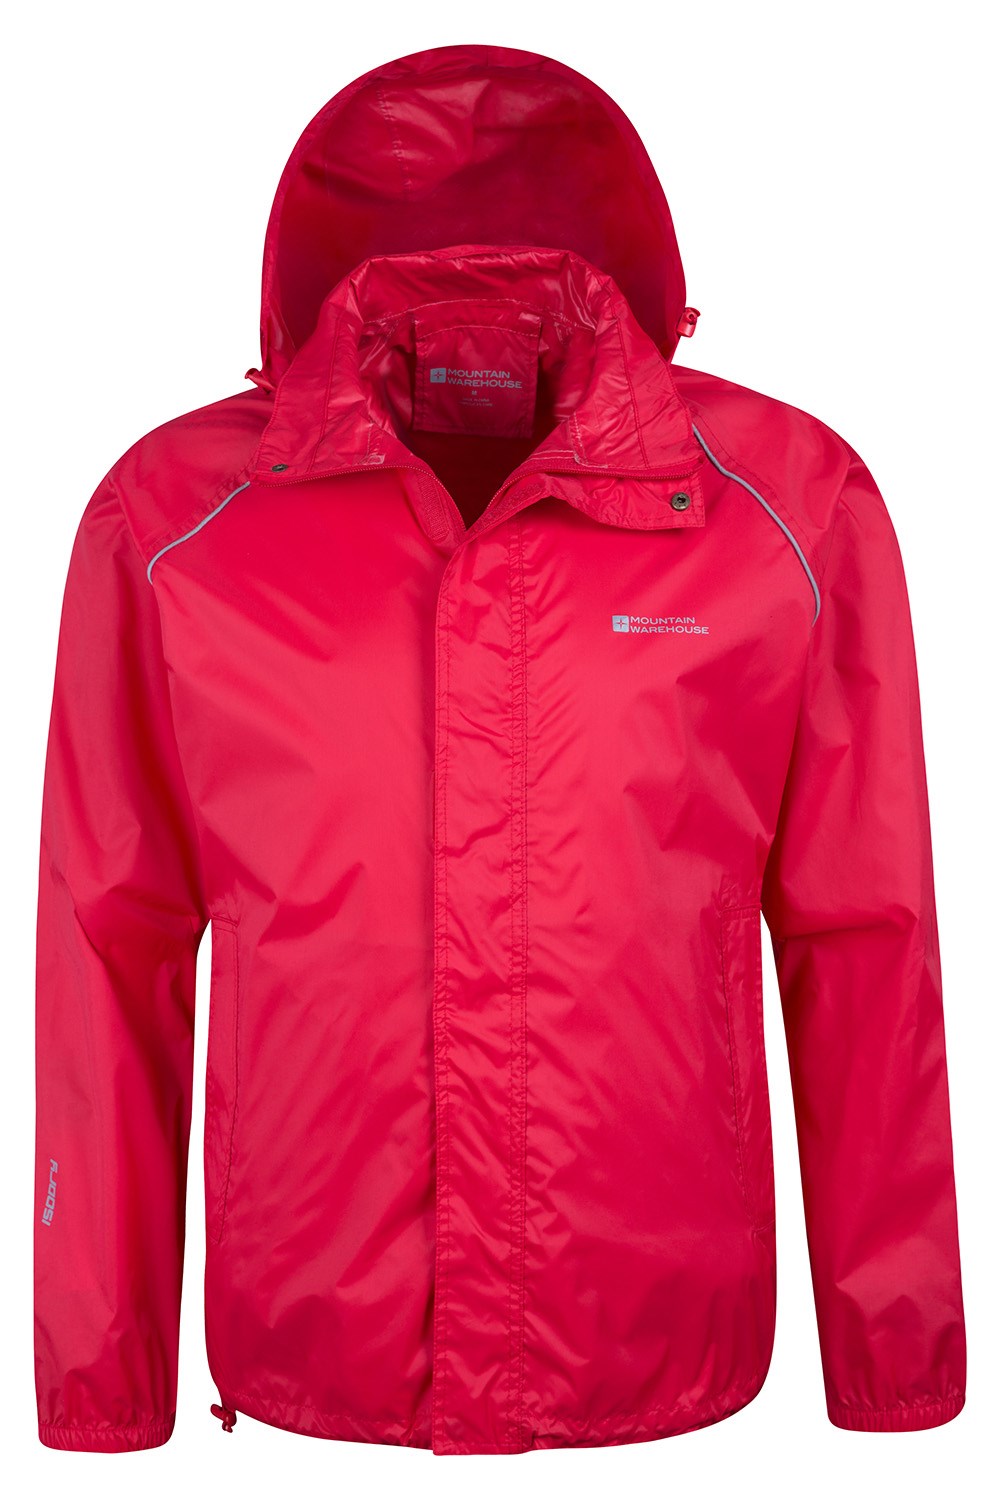 Mountain Warehouse Pakka Mens Waterproof Jacket | eBay